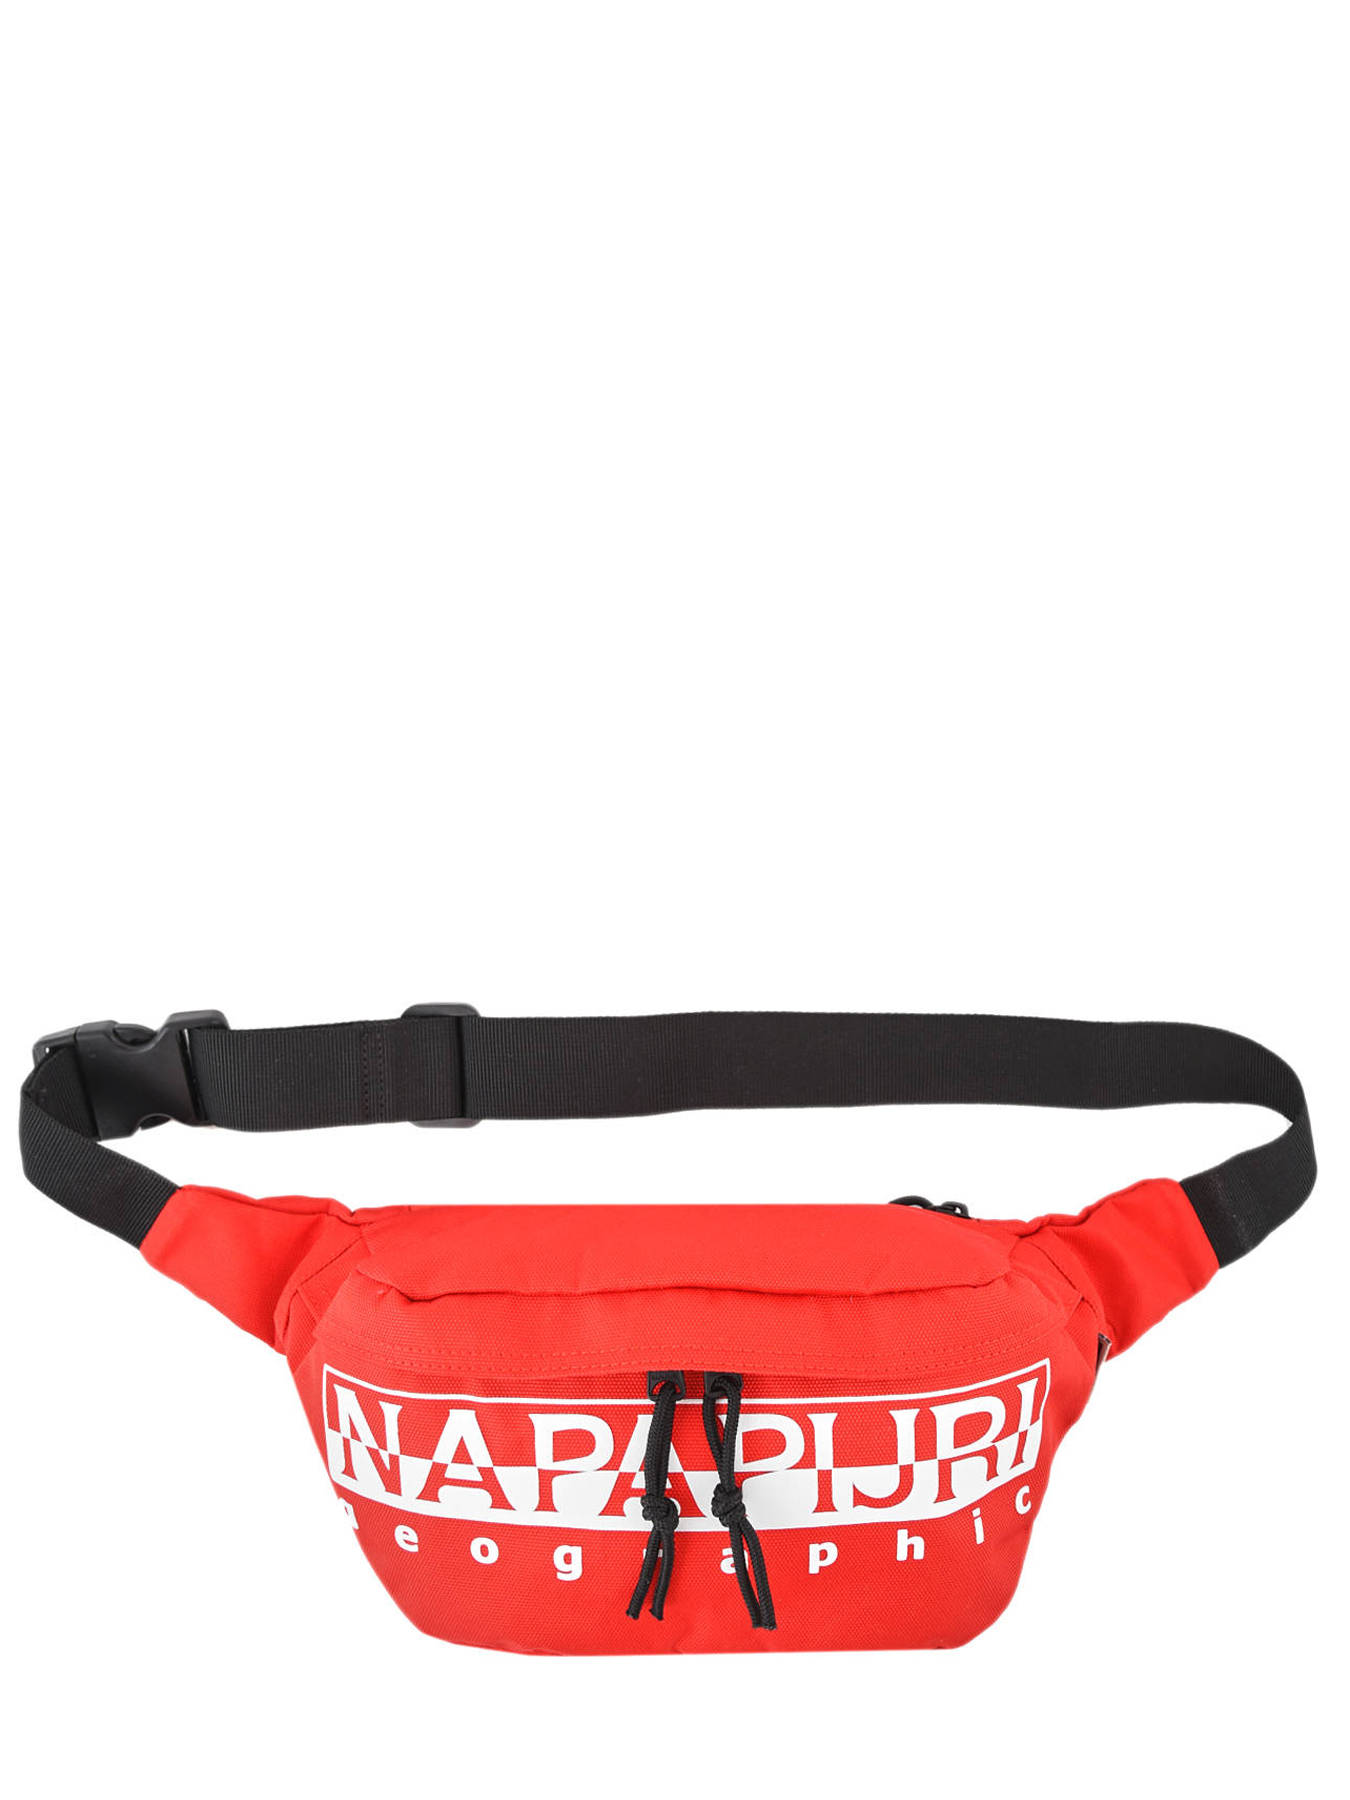 Backpack Napapijri Happy Daypack 5 Blu Marine - Shop and Buy online